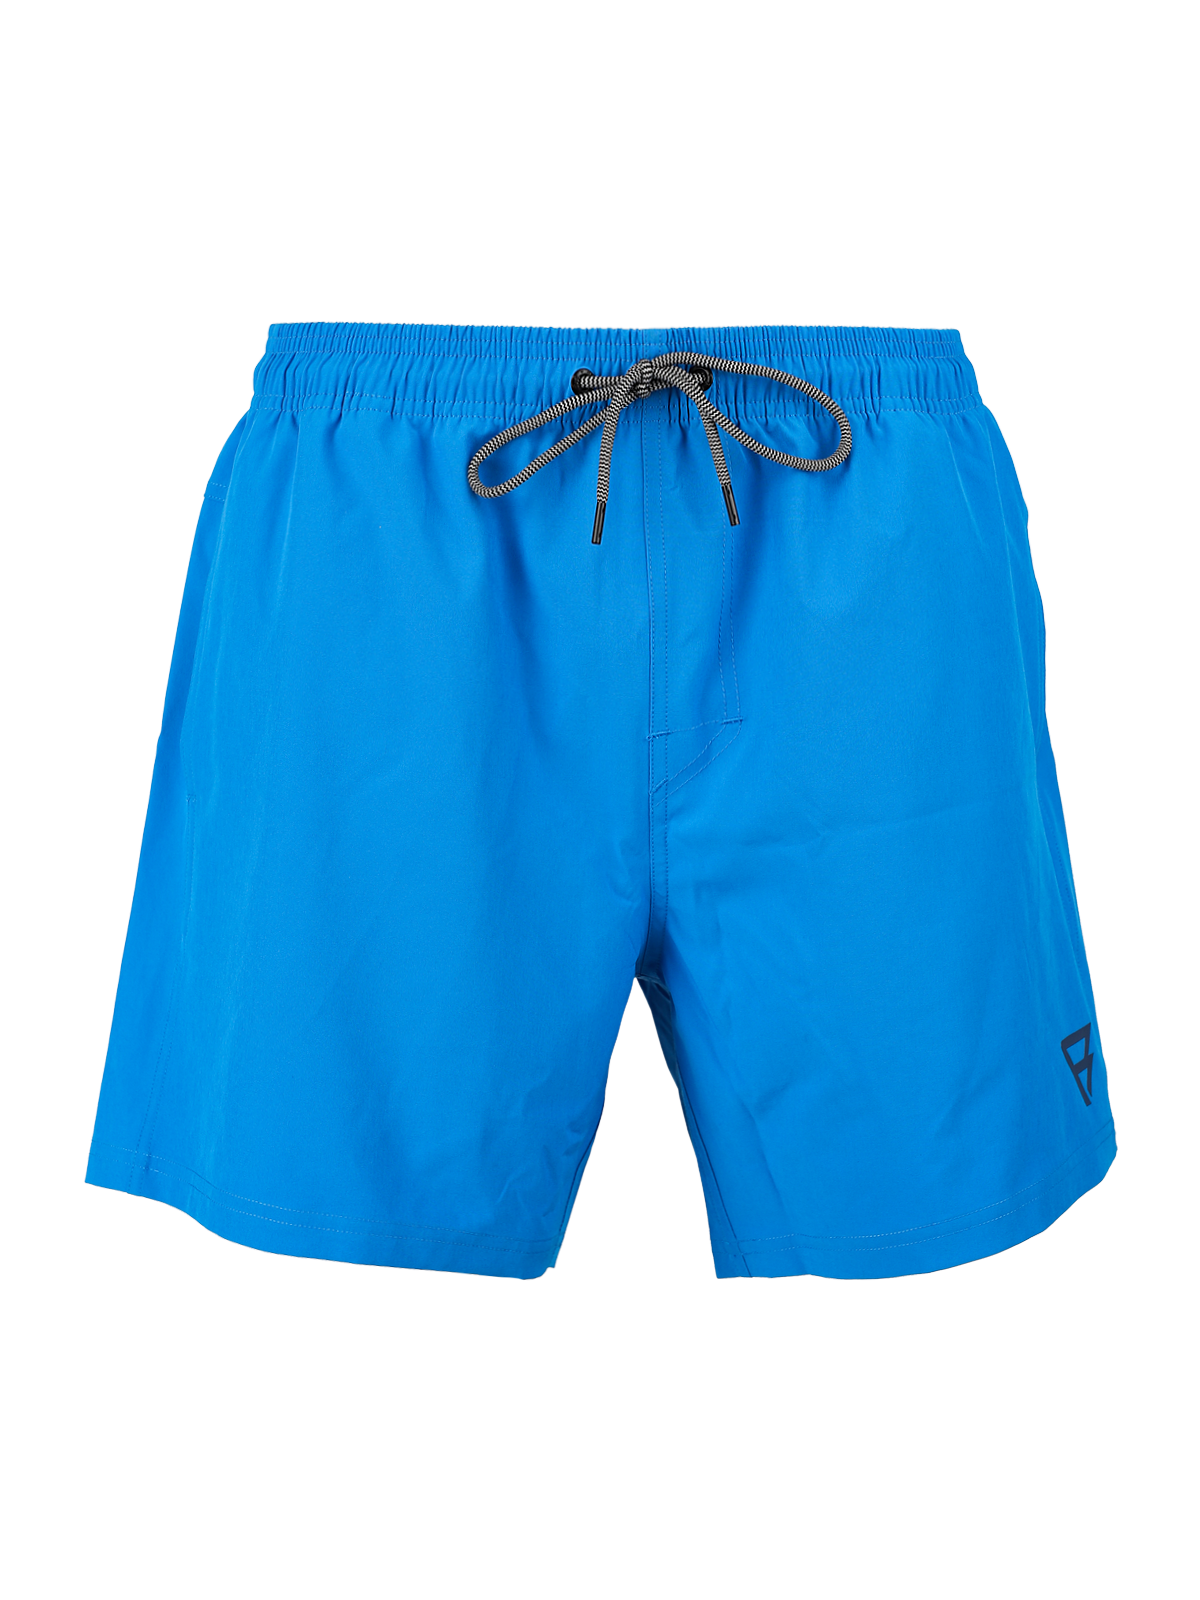 Calaro-R Men Swim Shorts | Neon Blue